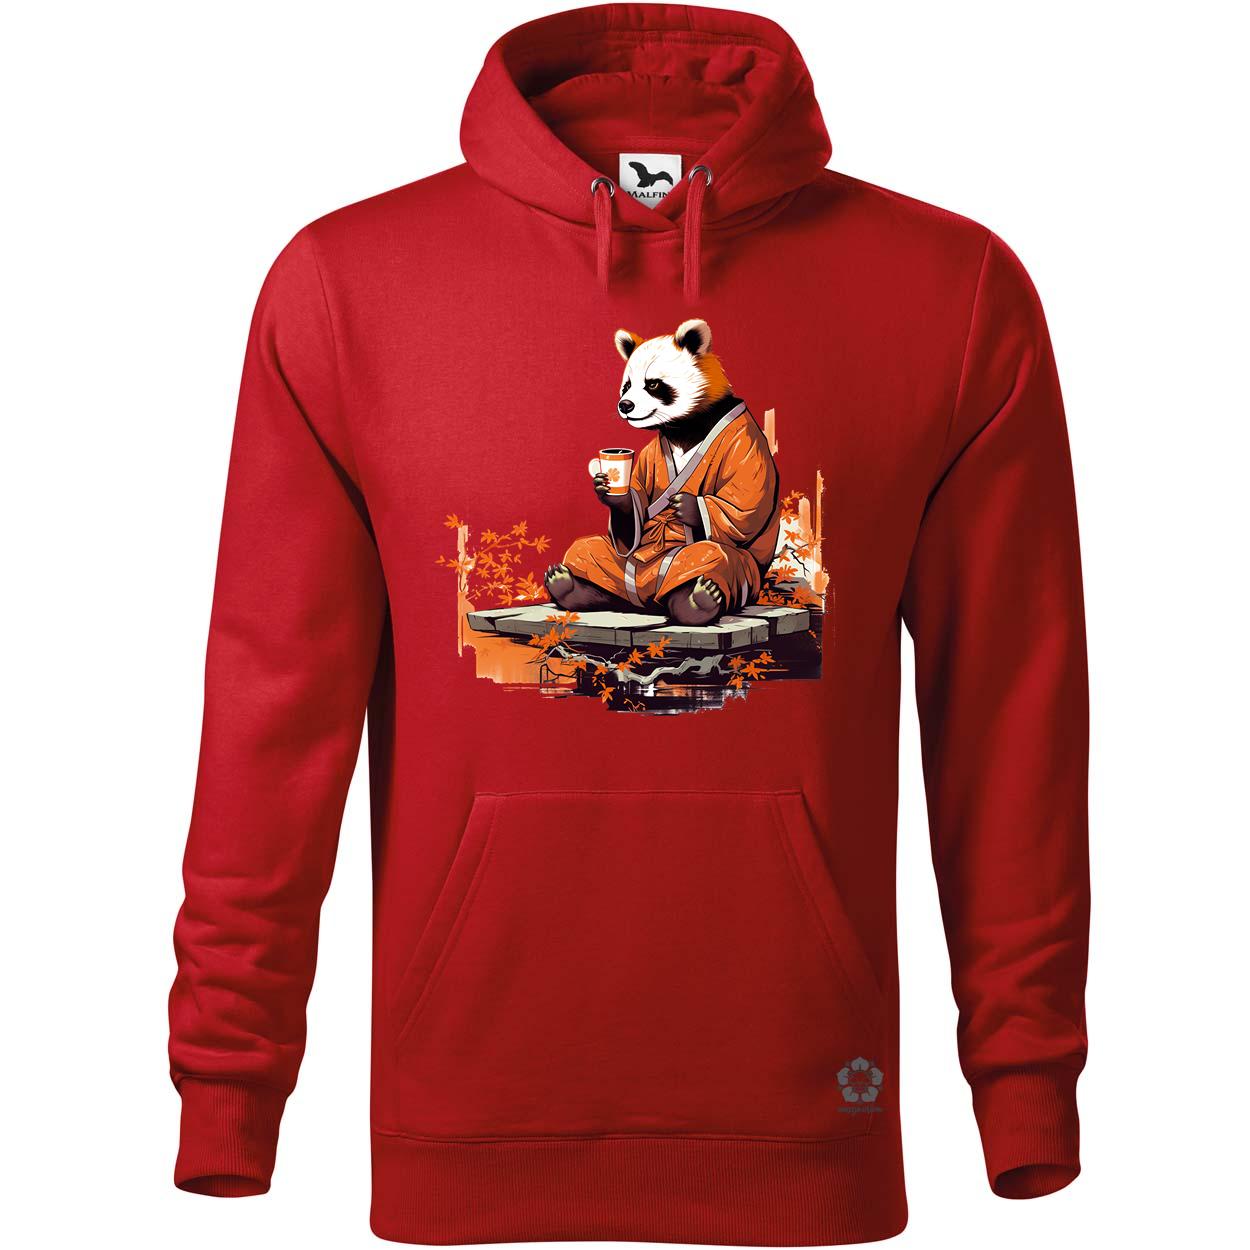 Vörös panda teázik v3